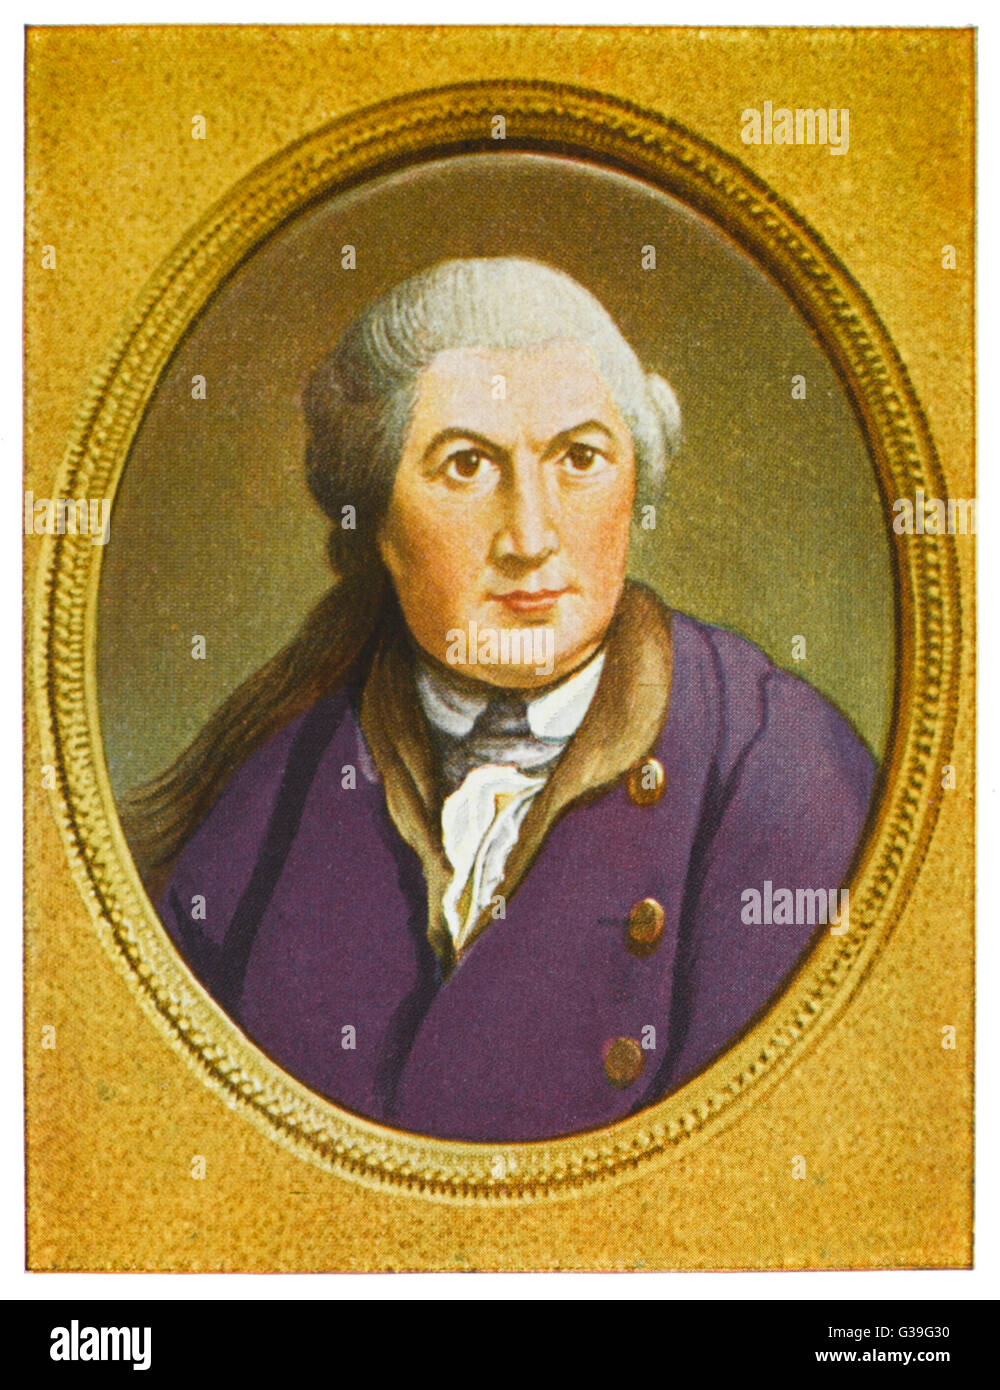 DAVID GARRICK actor inglés, famoso por sus papeles de Shakespeare Fecha: 1717 - 1779 Foto de stock